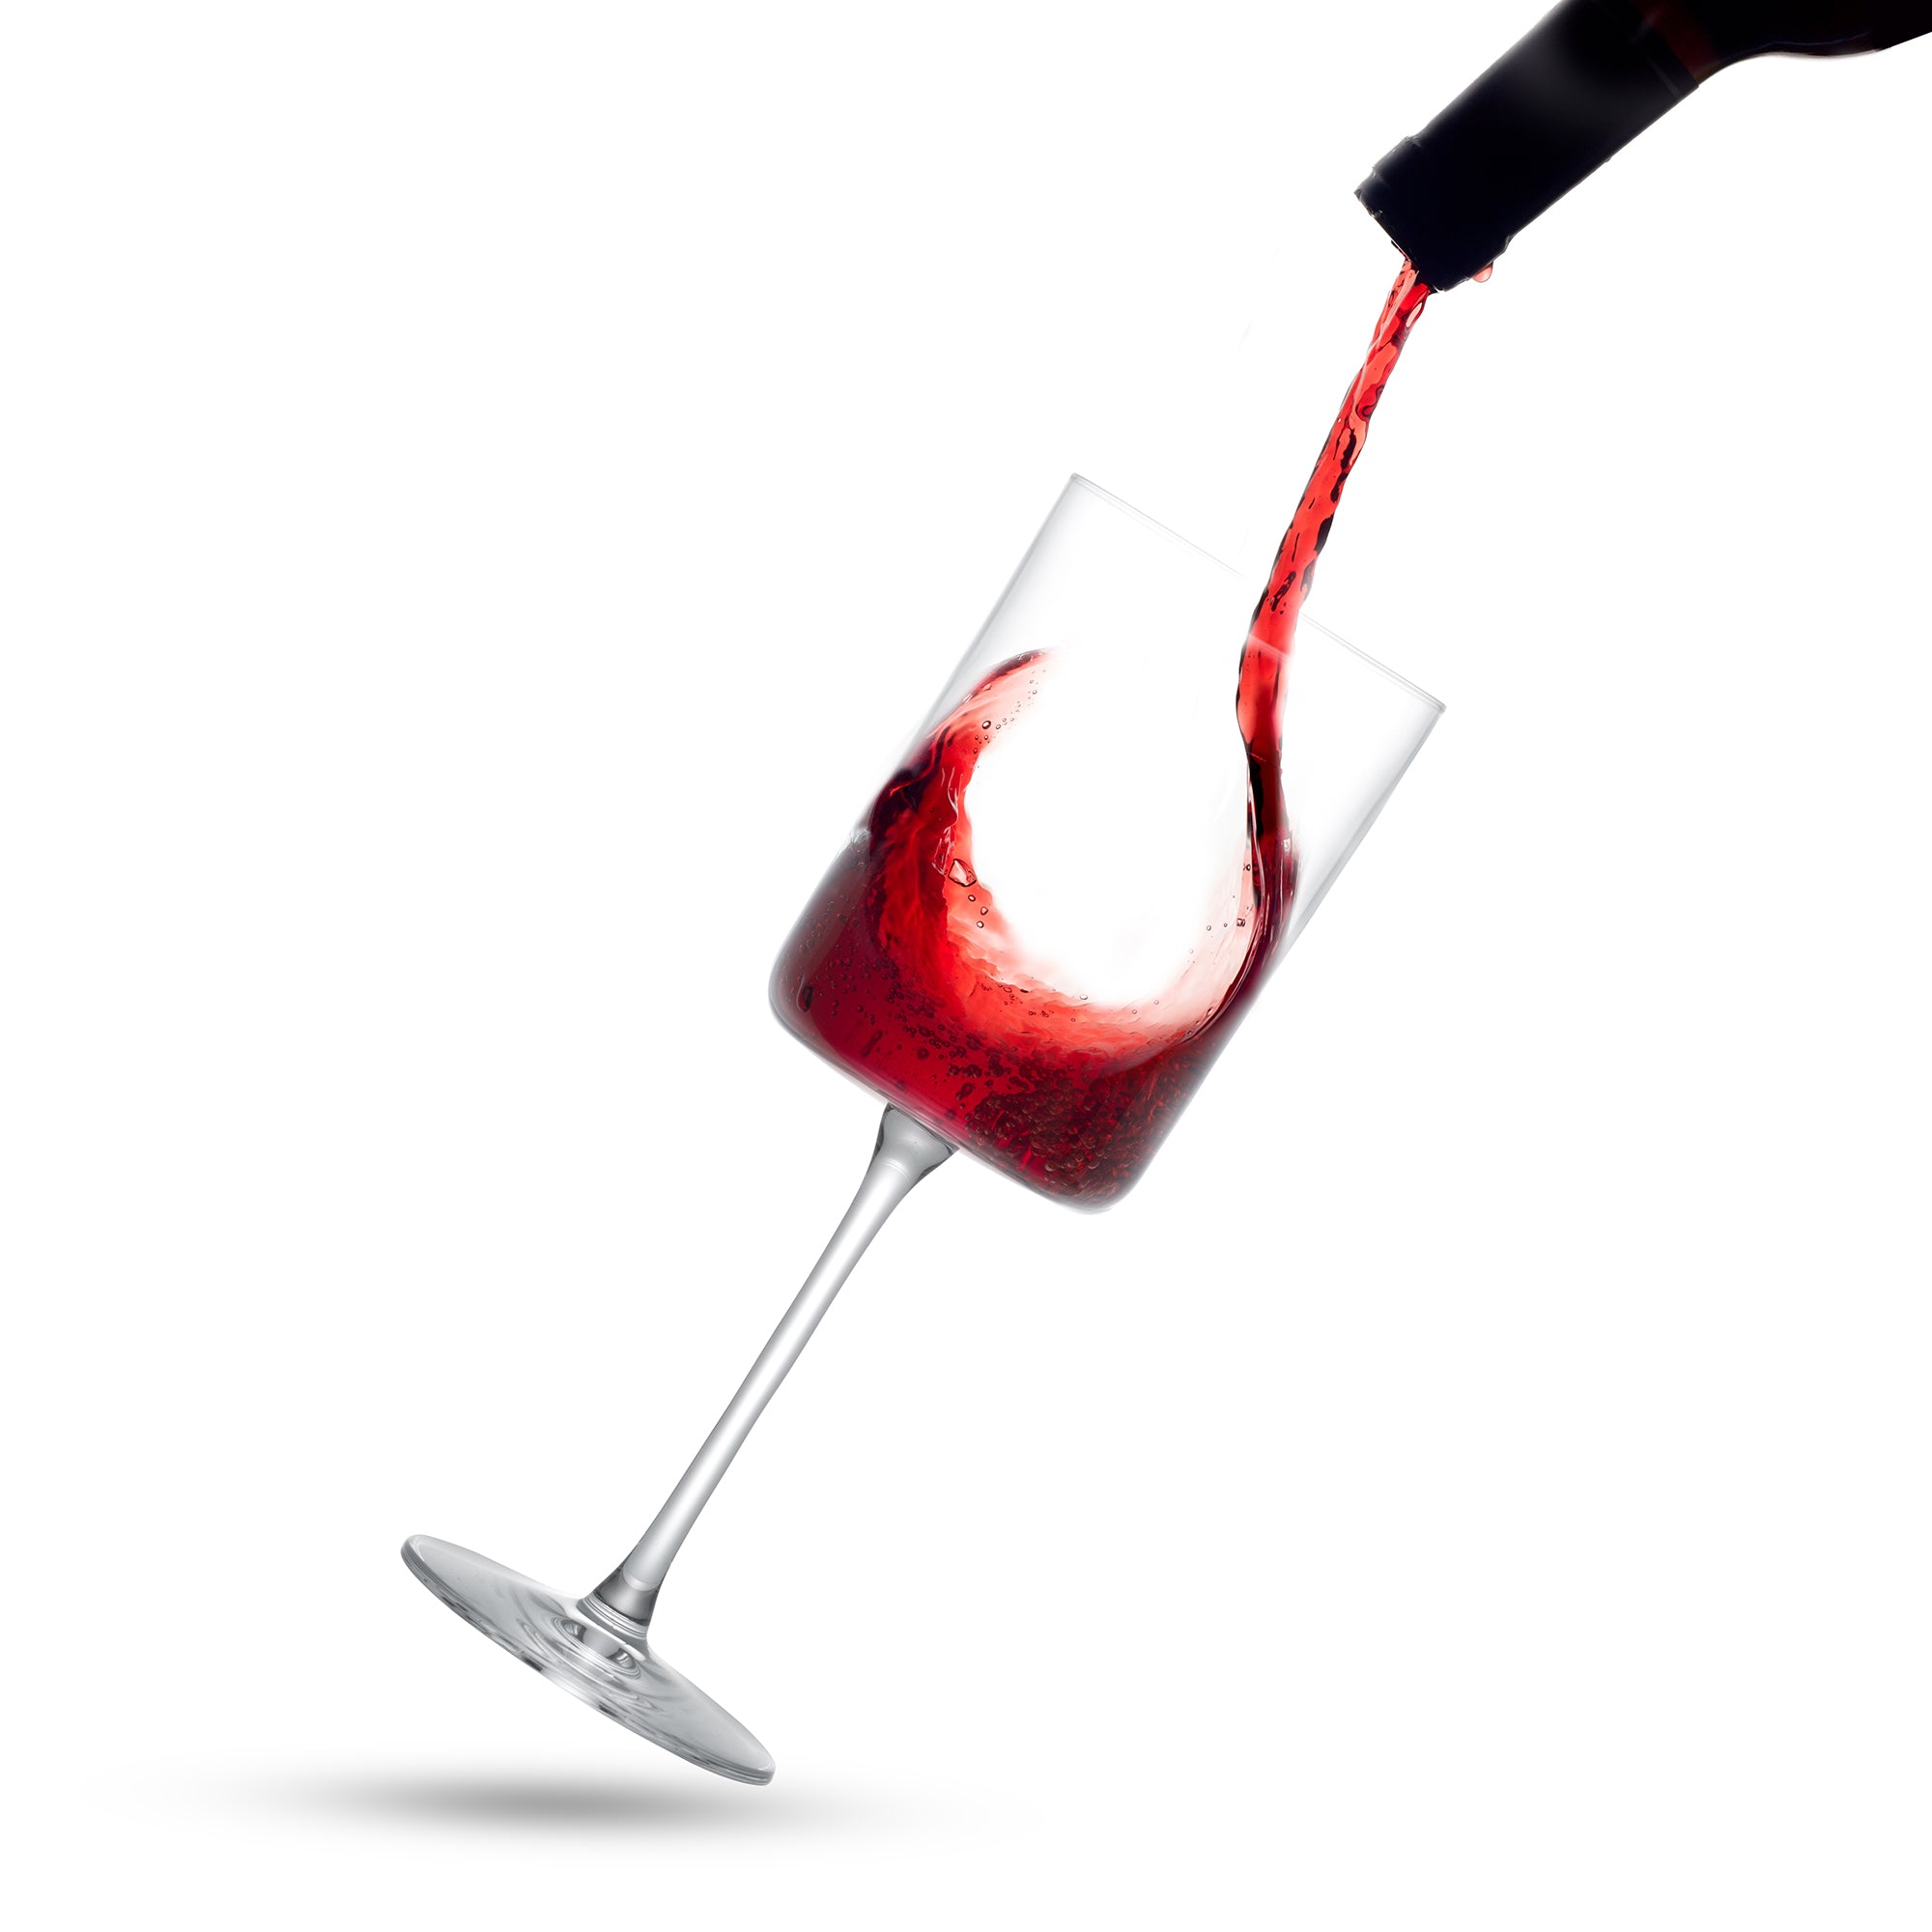 Claire Red Wine Glasses